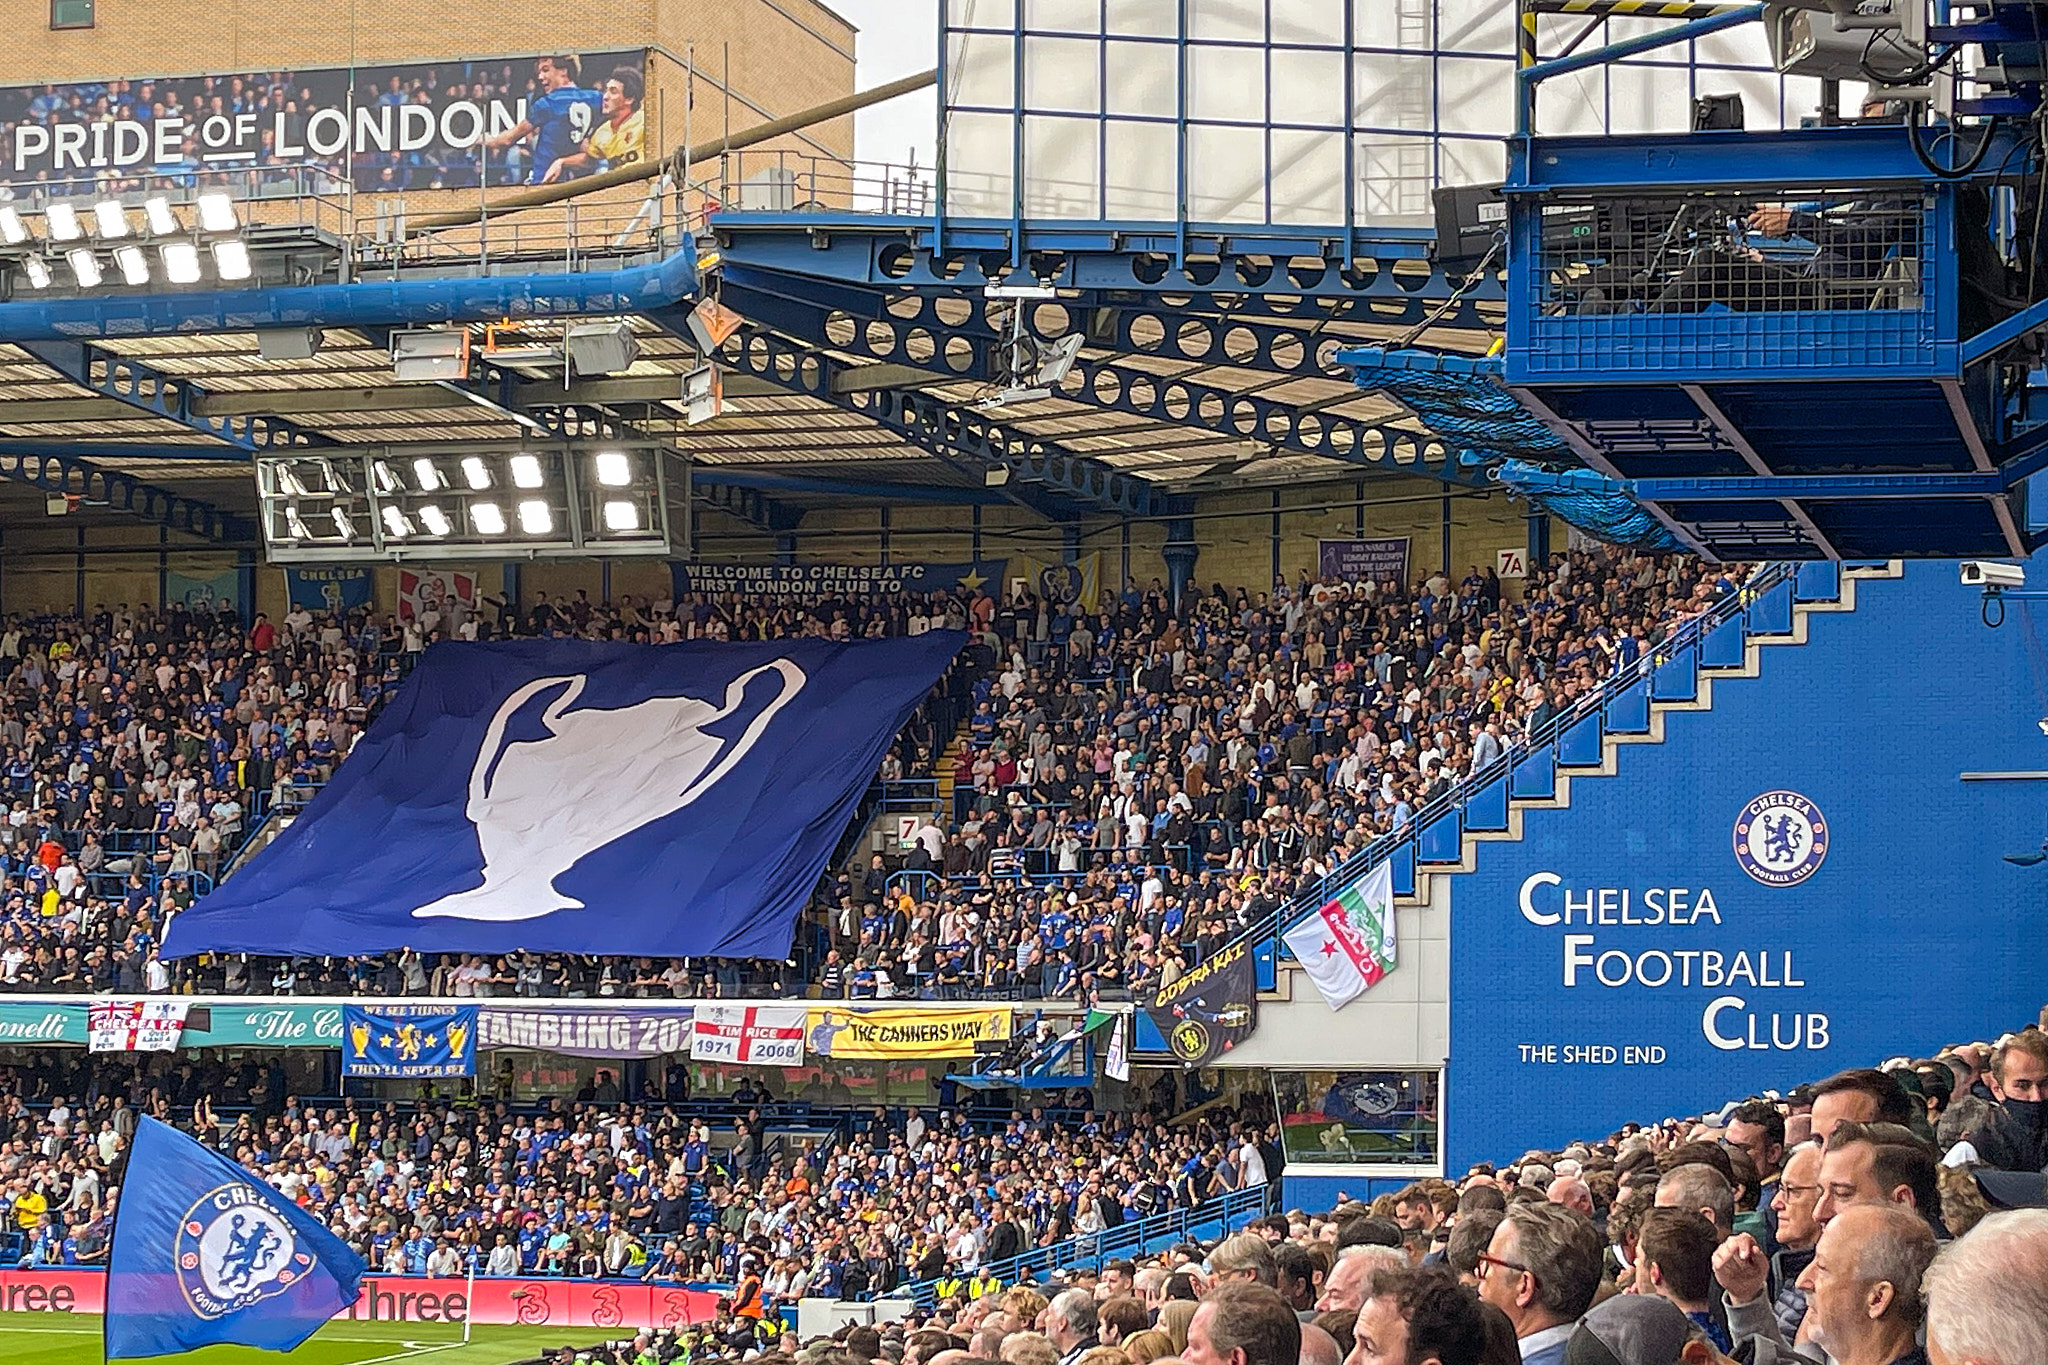 MySlowTrip - Chelsea Football Club Stamford Bridge Crowd